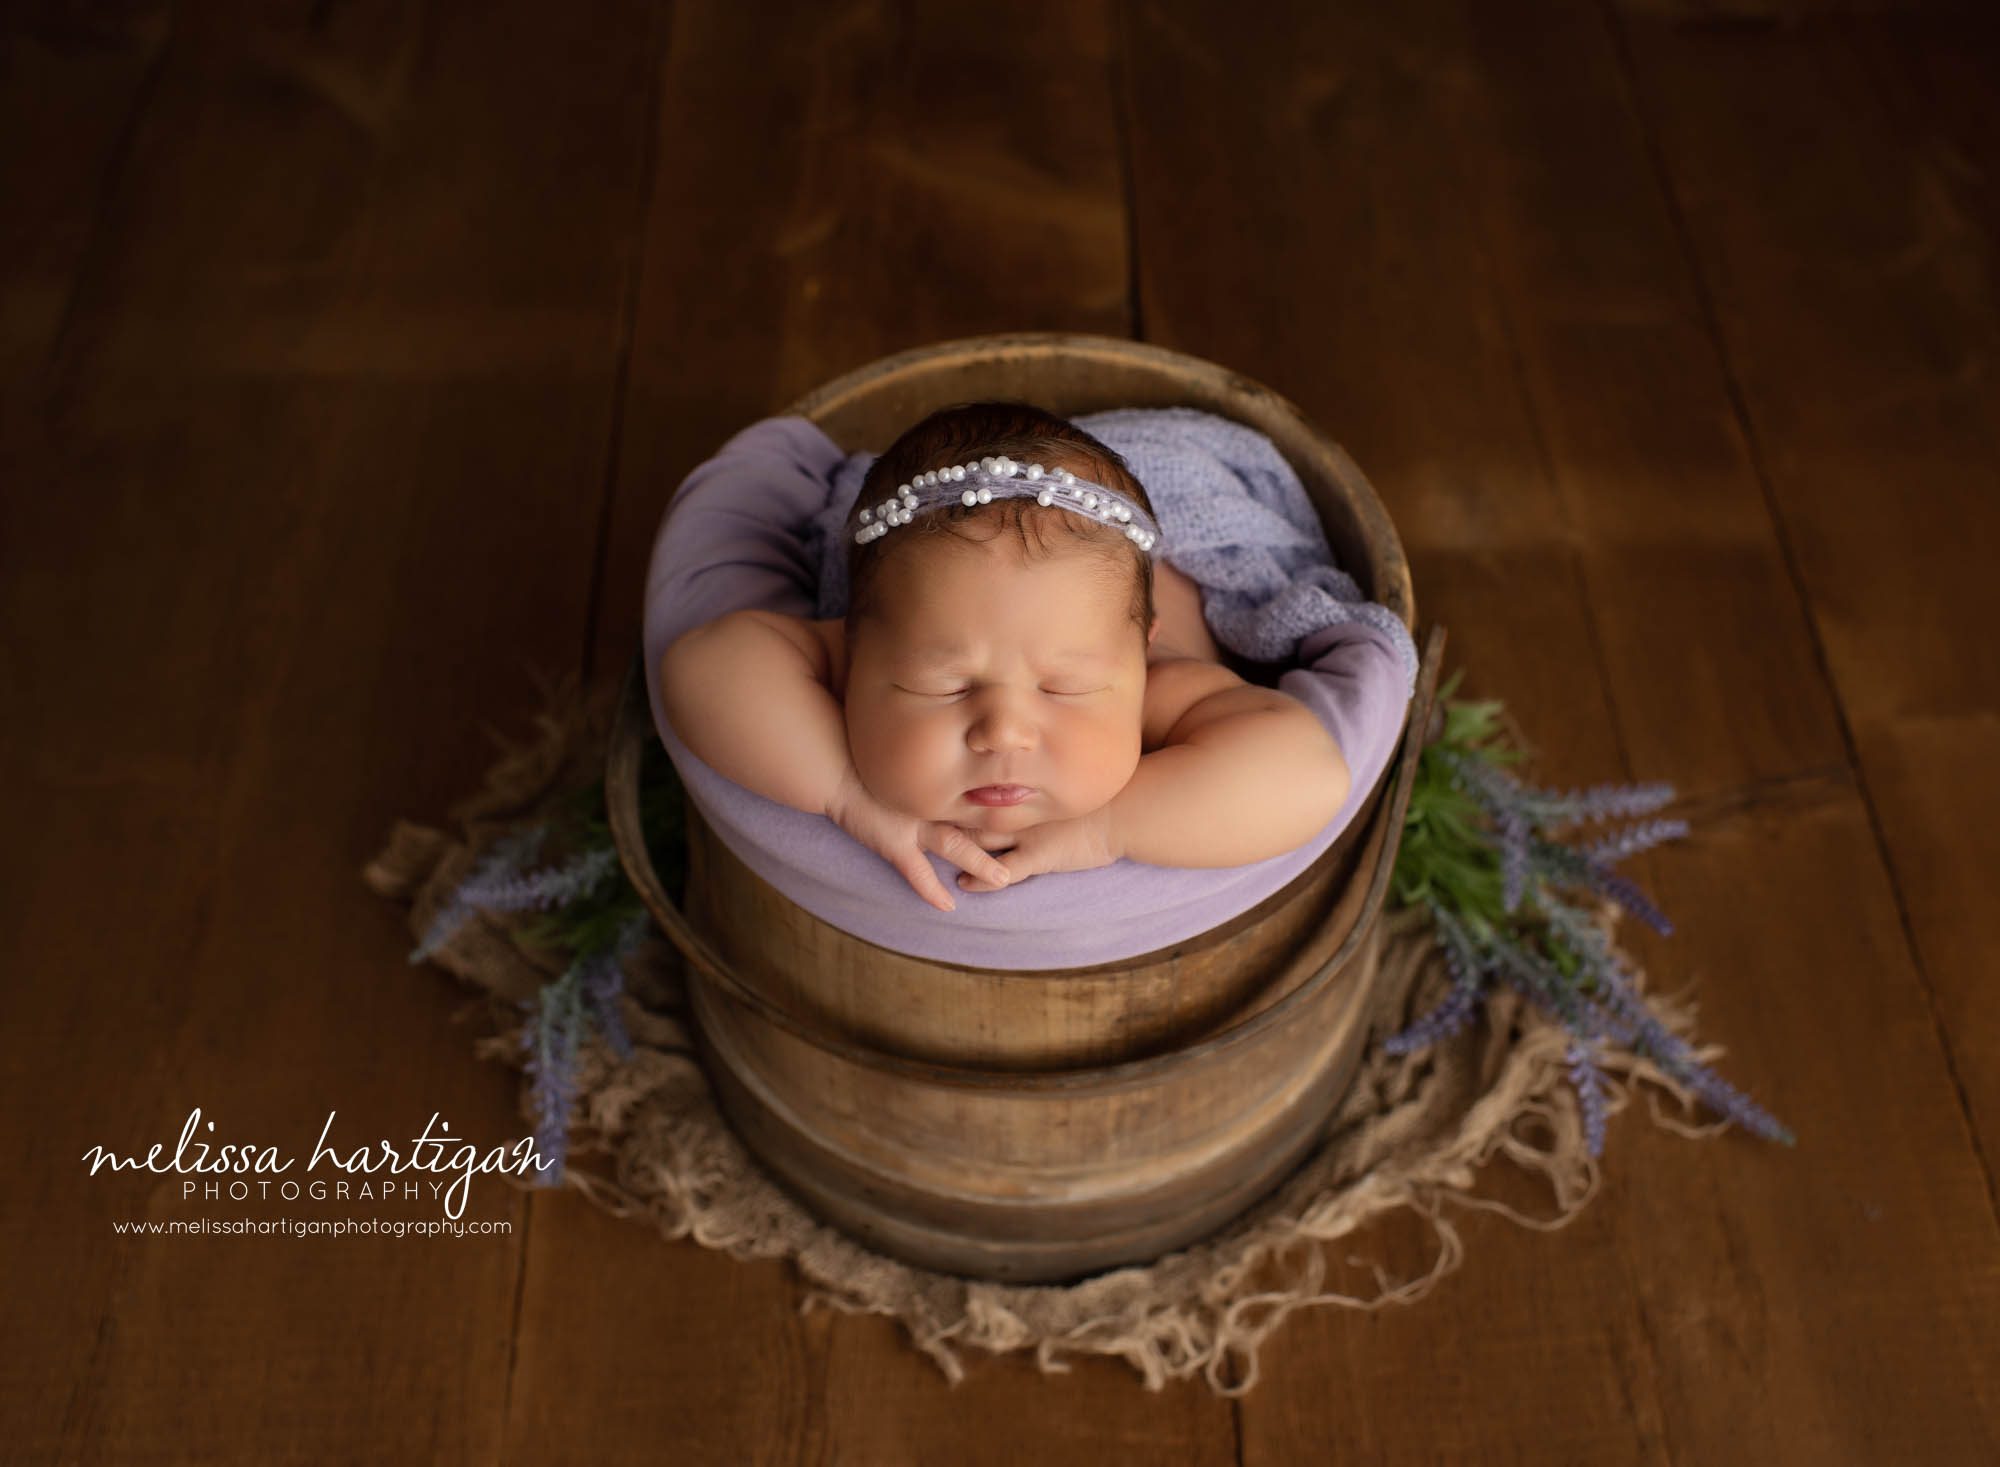 newborn baby girl posed in wooden bucket with purple lavendar stems